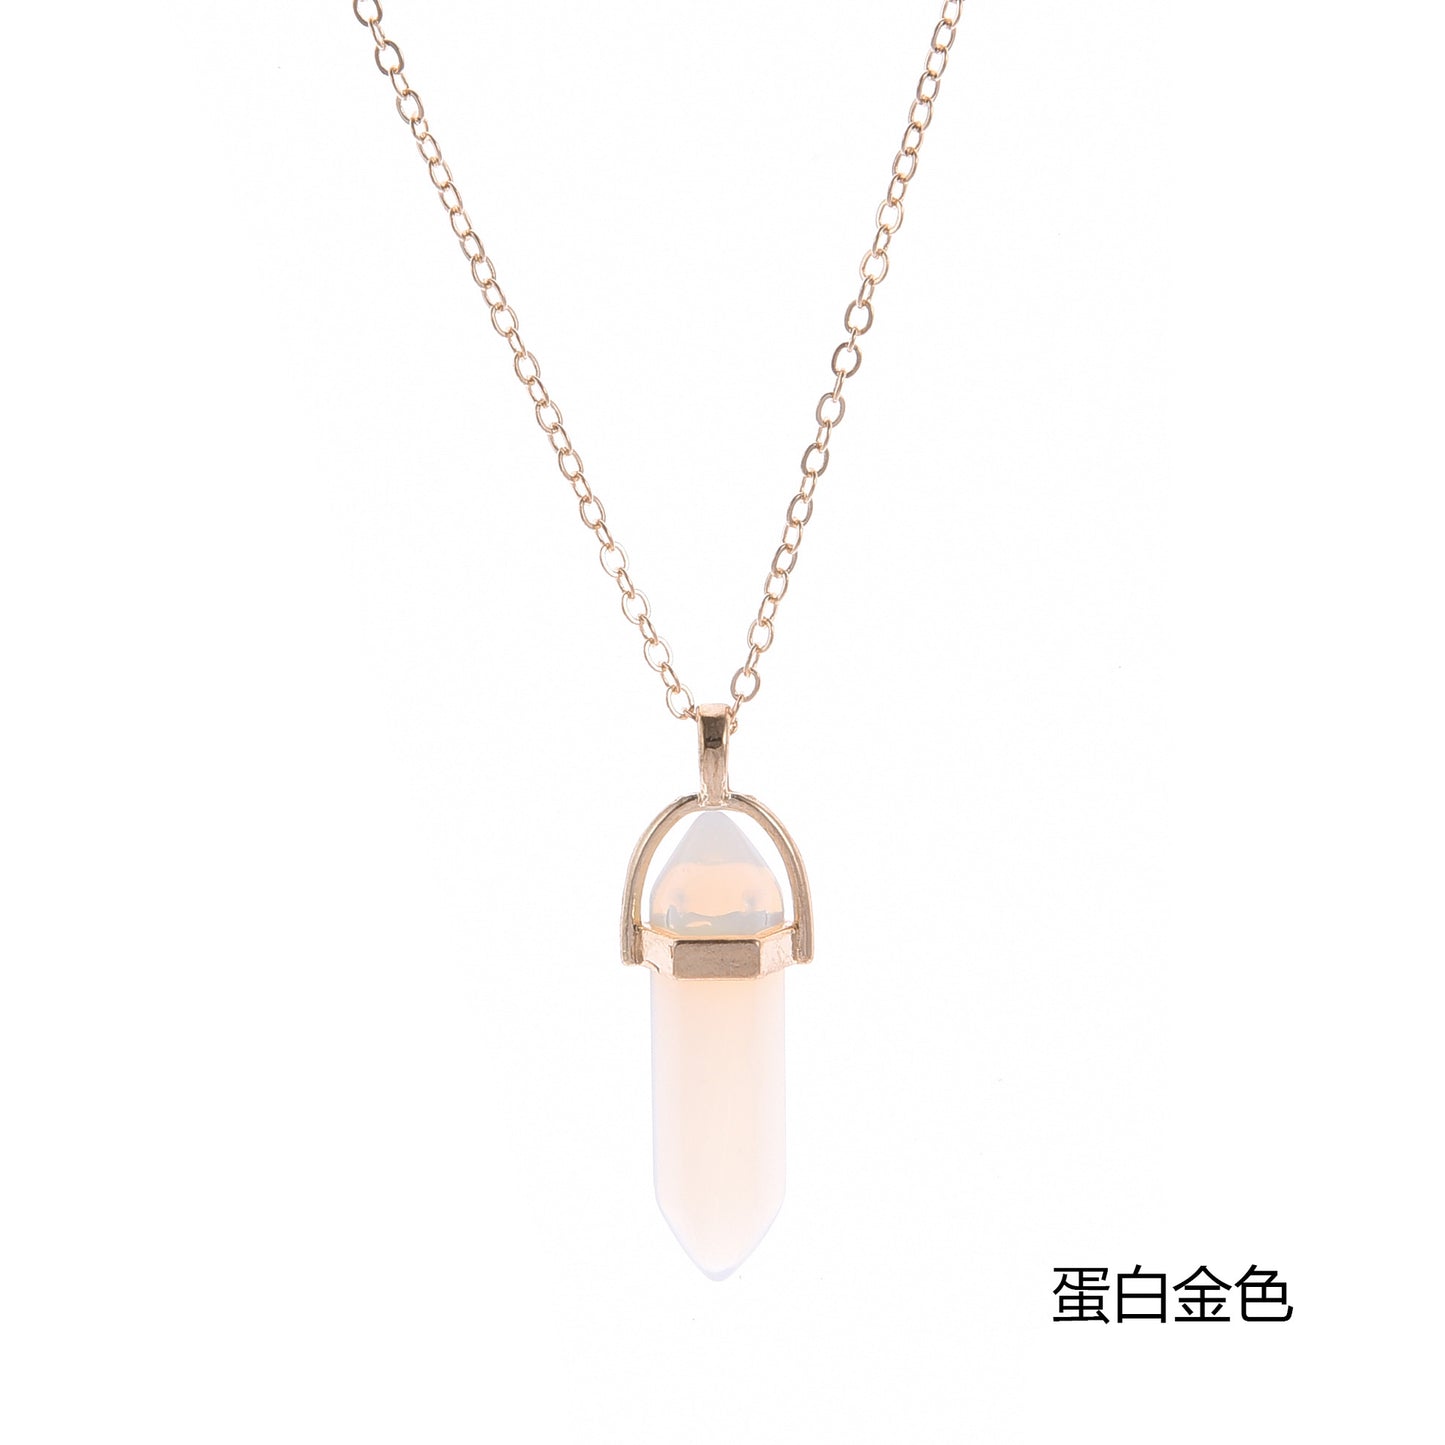 New Fashion Short Bullet Pendant Necklace Crystal Stone Pendant Alloy Necklace